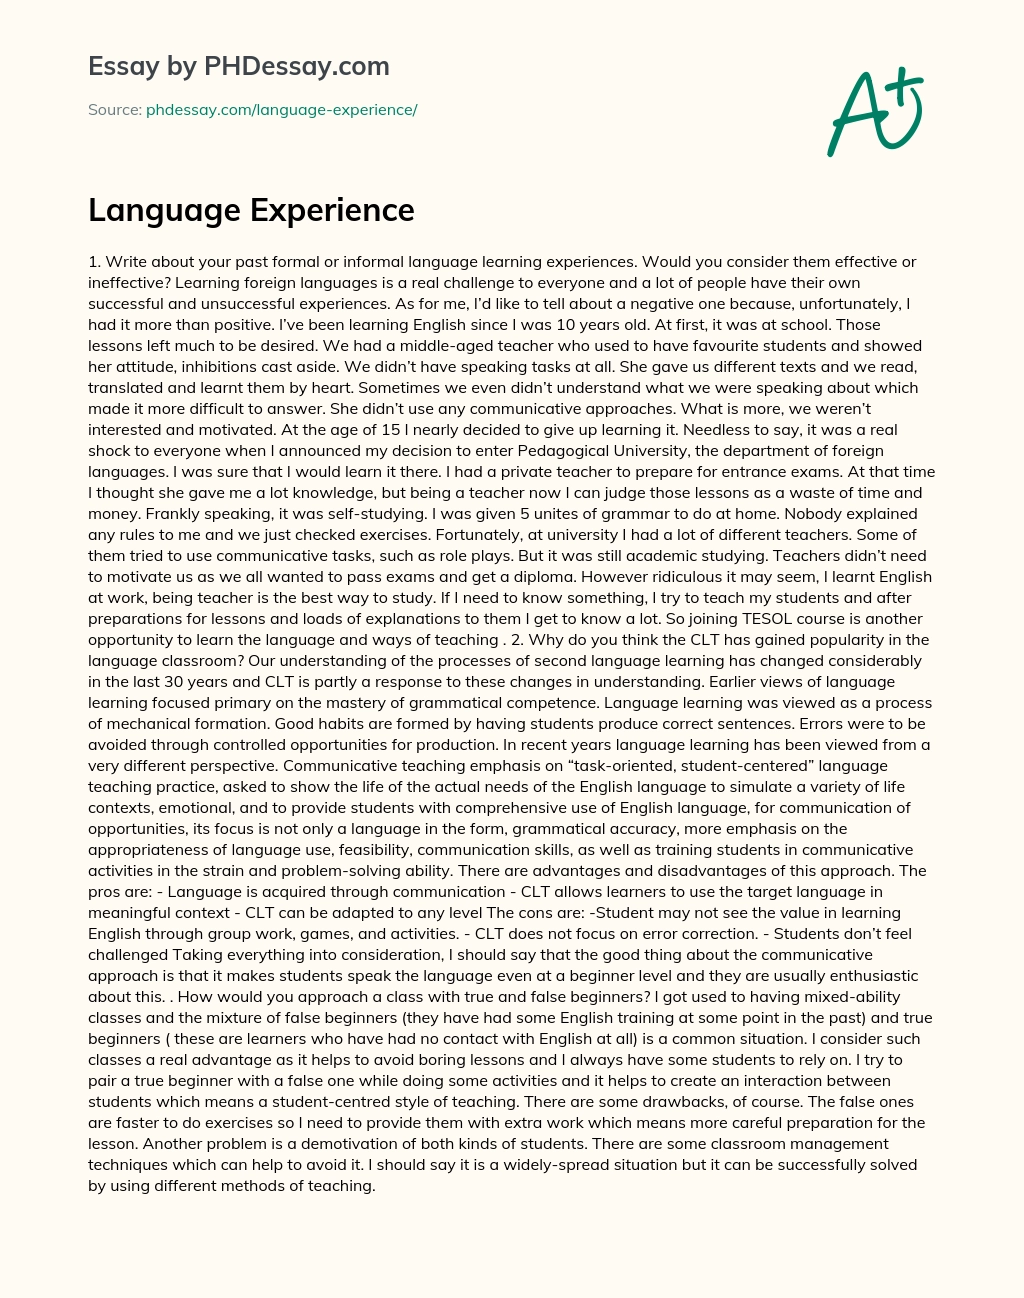 Language Experience essay